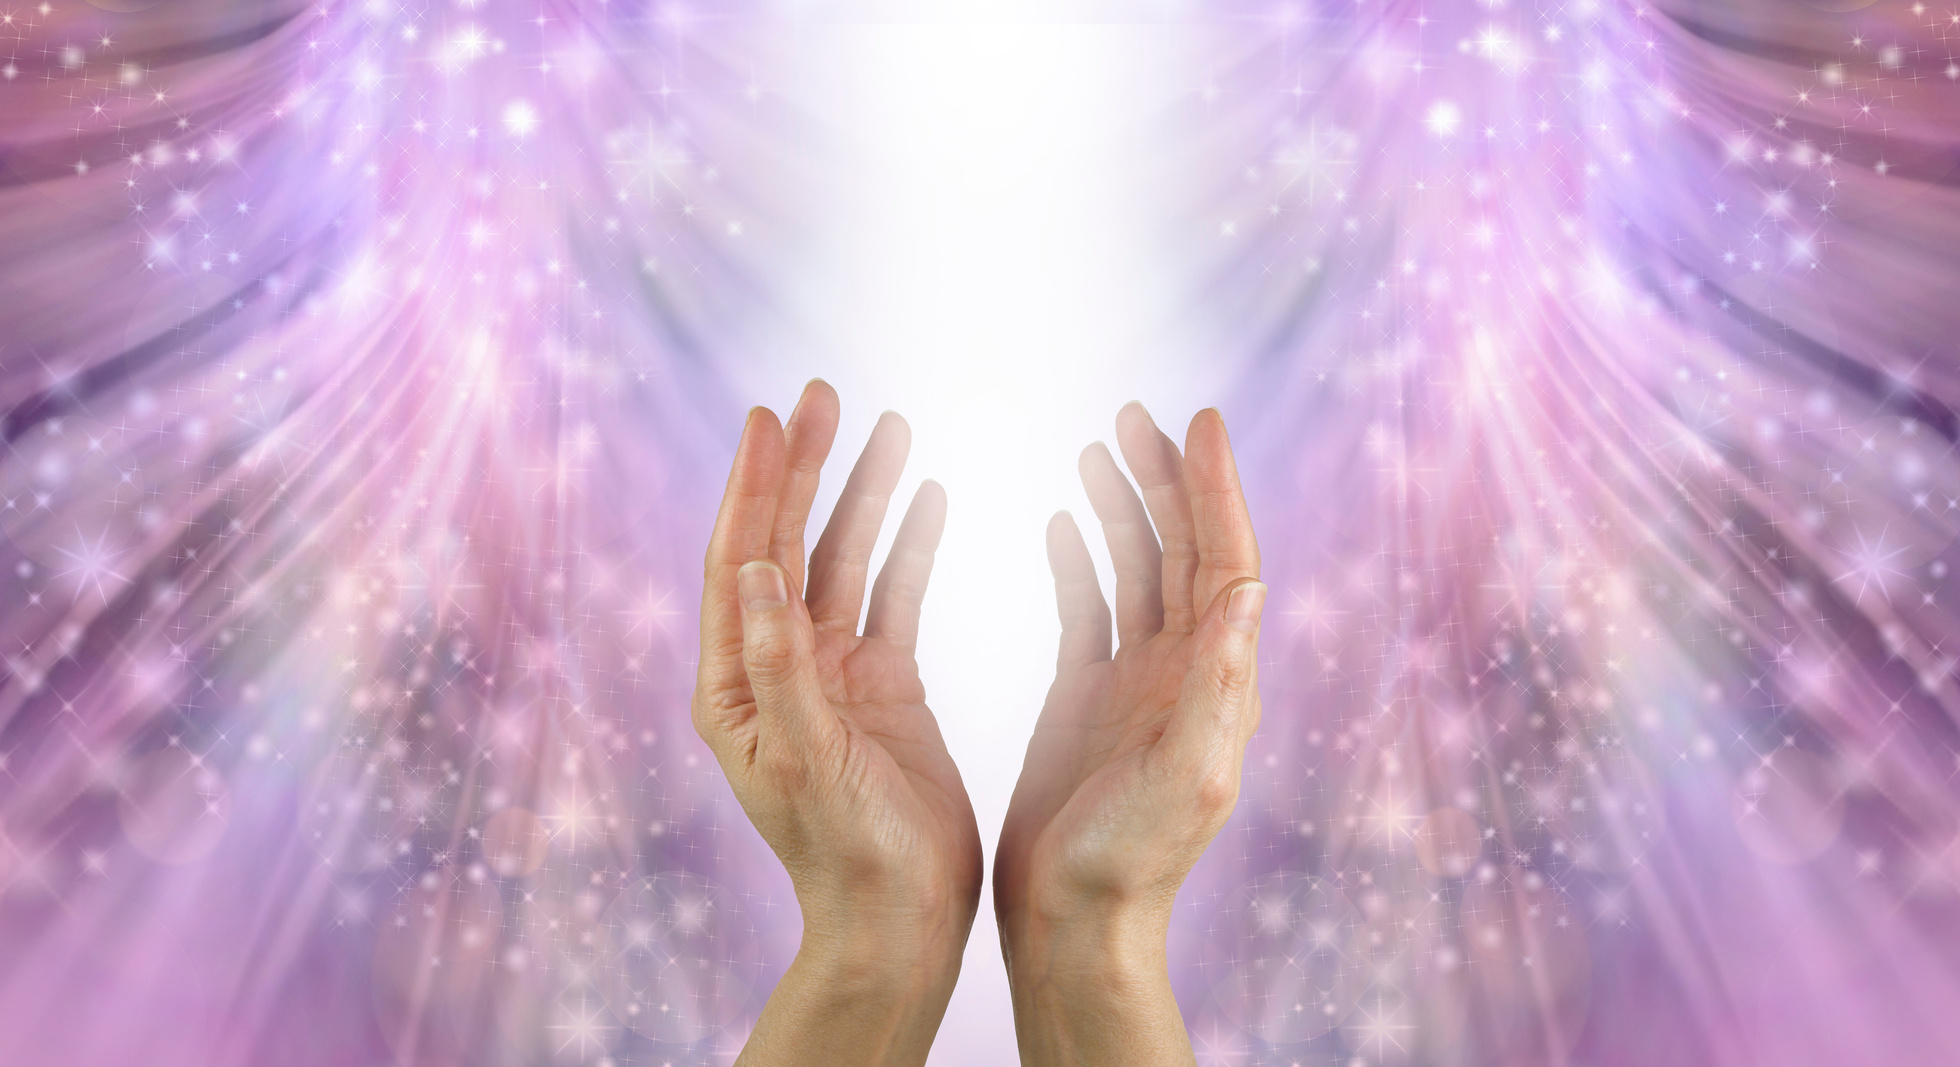 Bathing Hands in Beautiful Shimmering Spiritual Healing Resonance